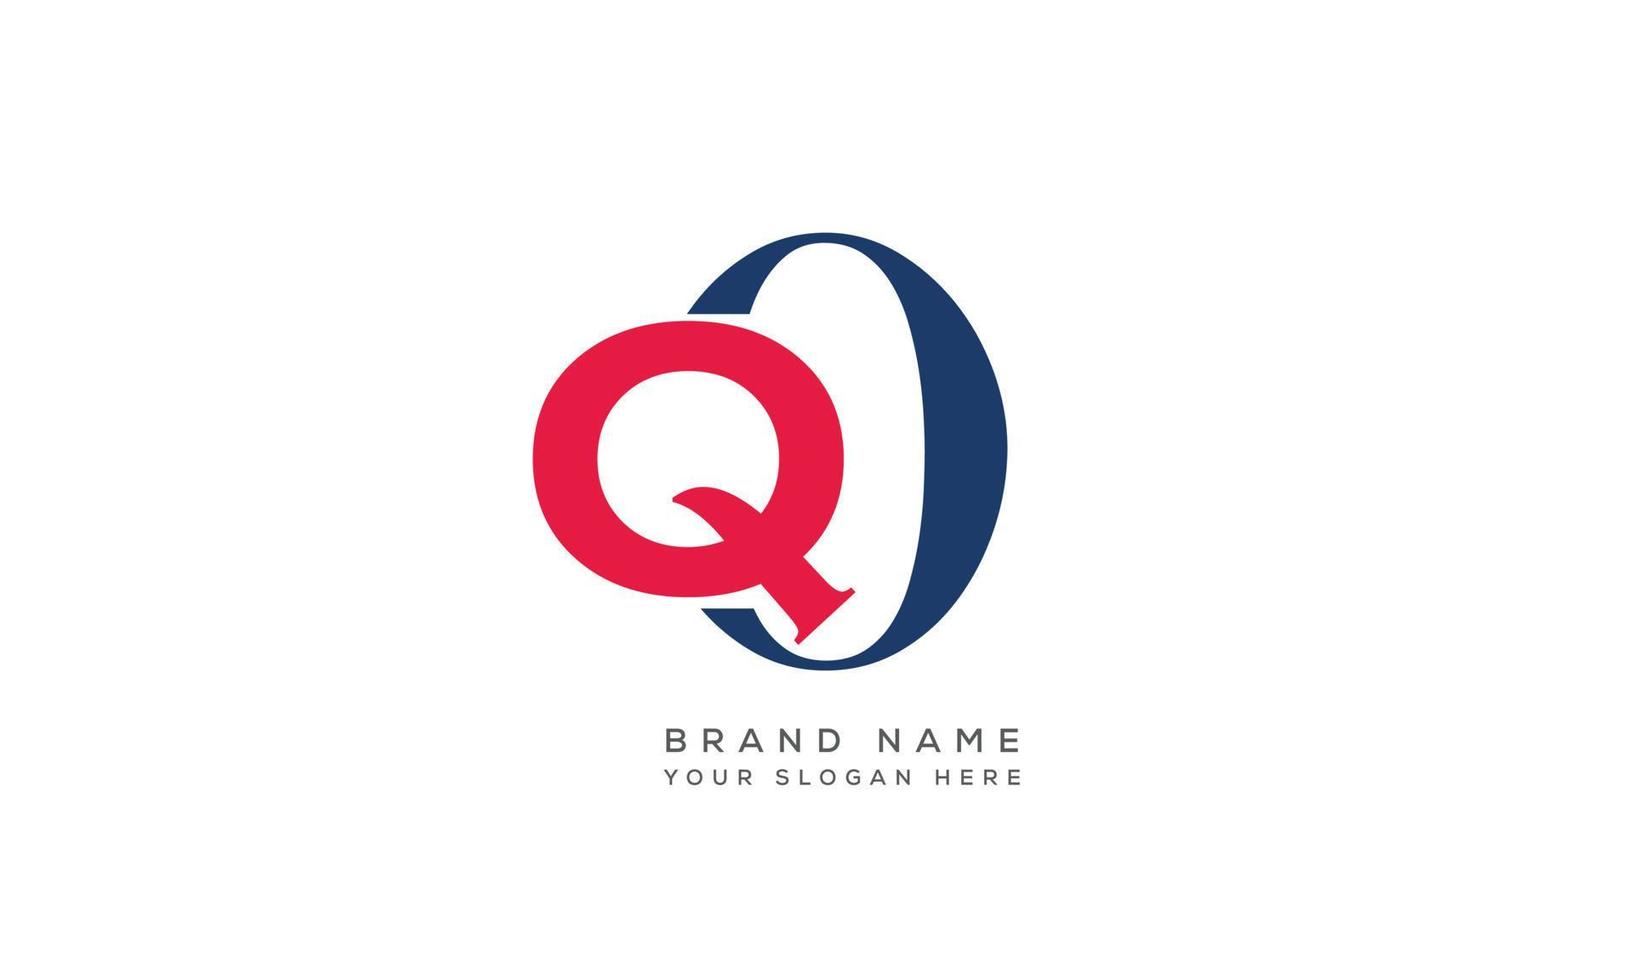 letras do alfabeto iniciais monograma logotipo qo, oq, q e o vetor